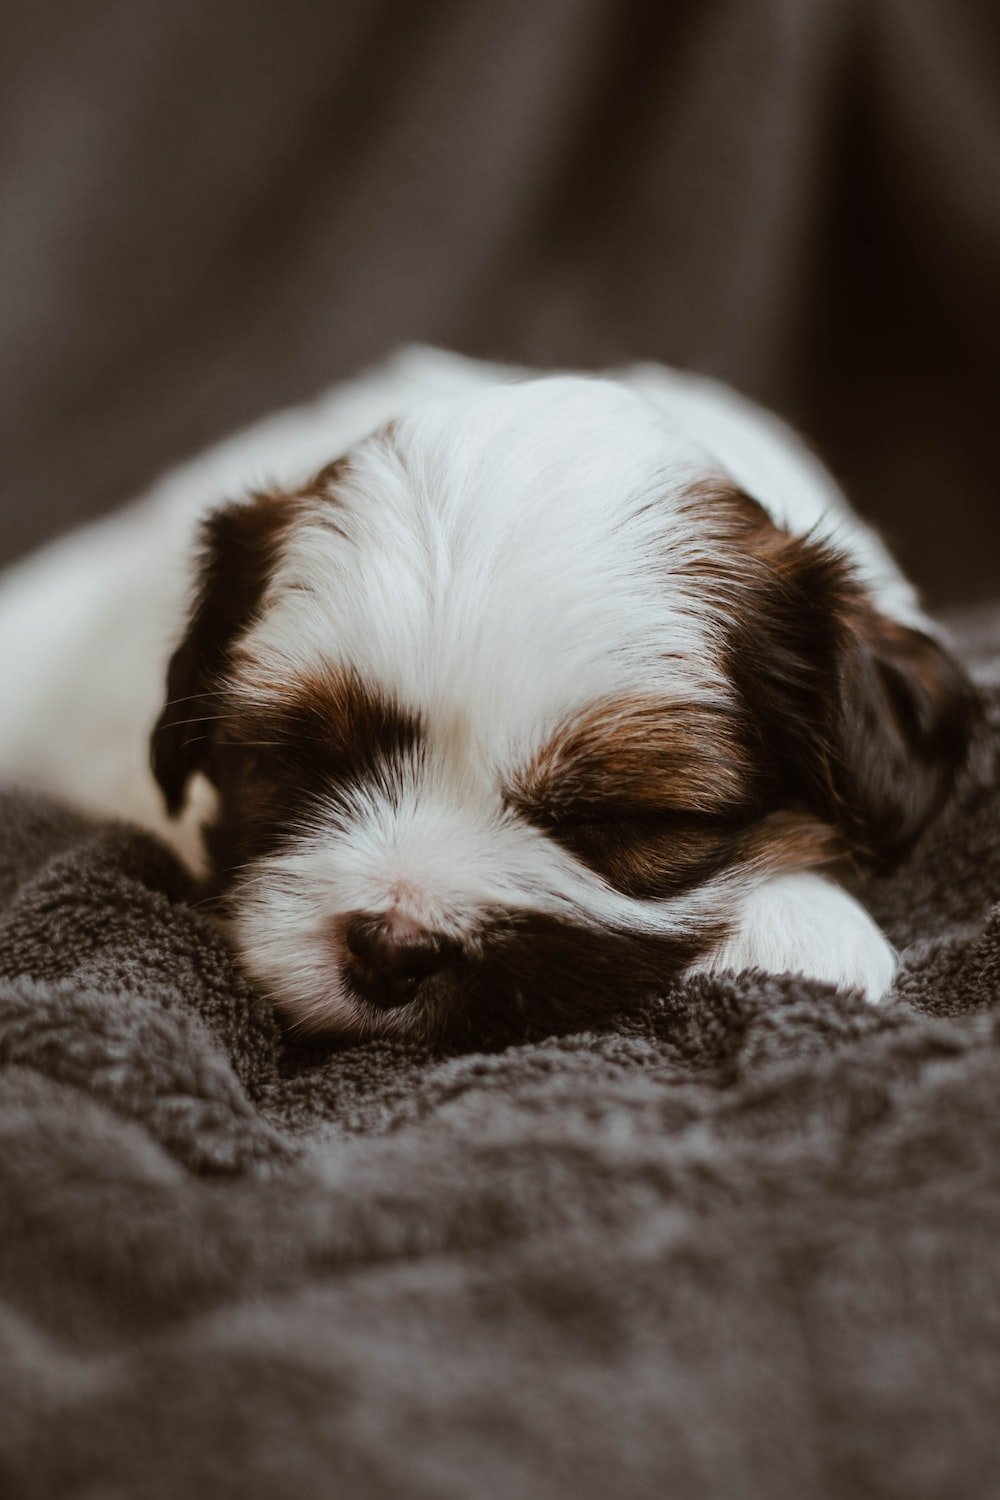 Puppy sleeping on gray textile photo